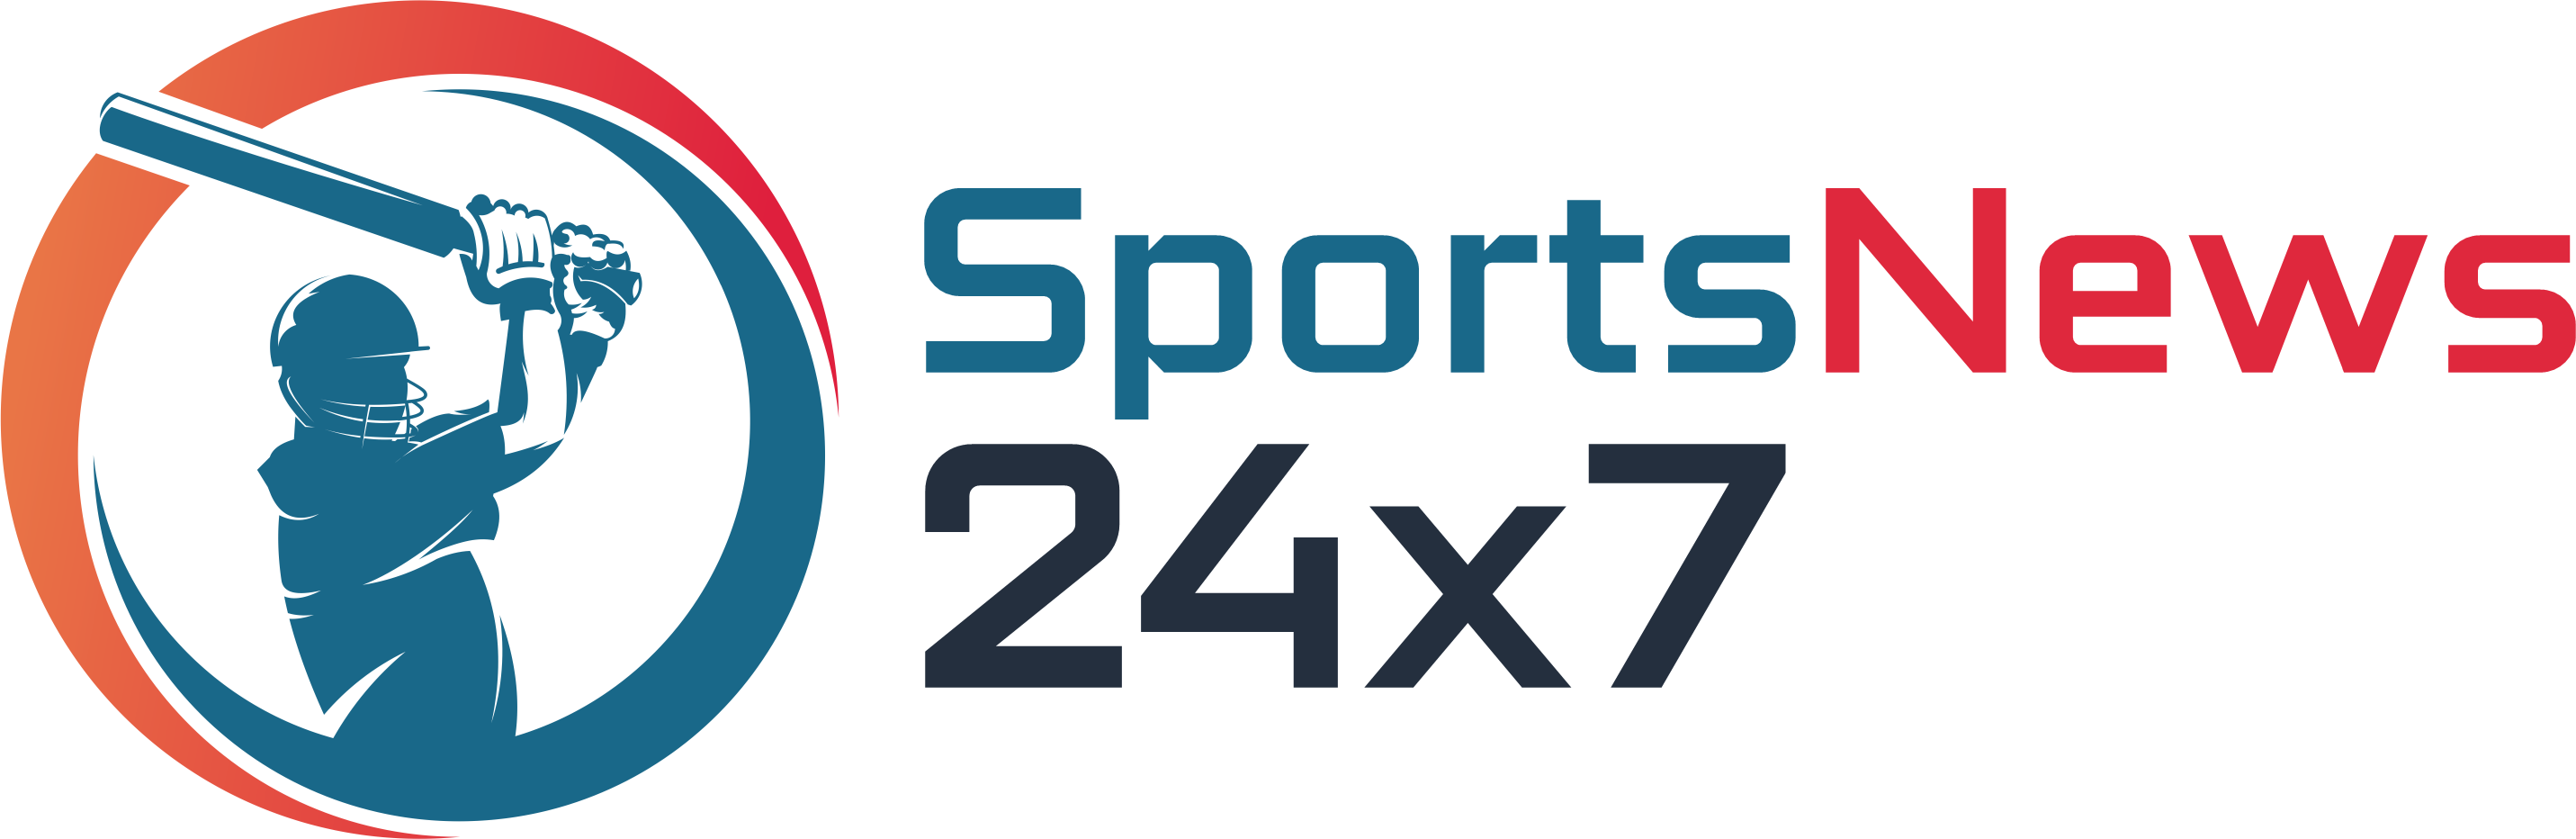 Sports Betting Sites - Sportsnews24x7